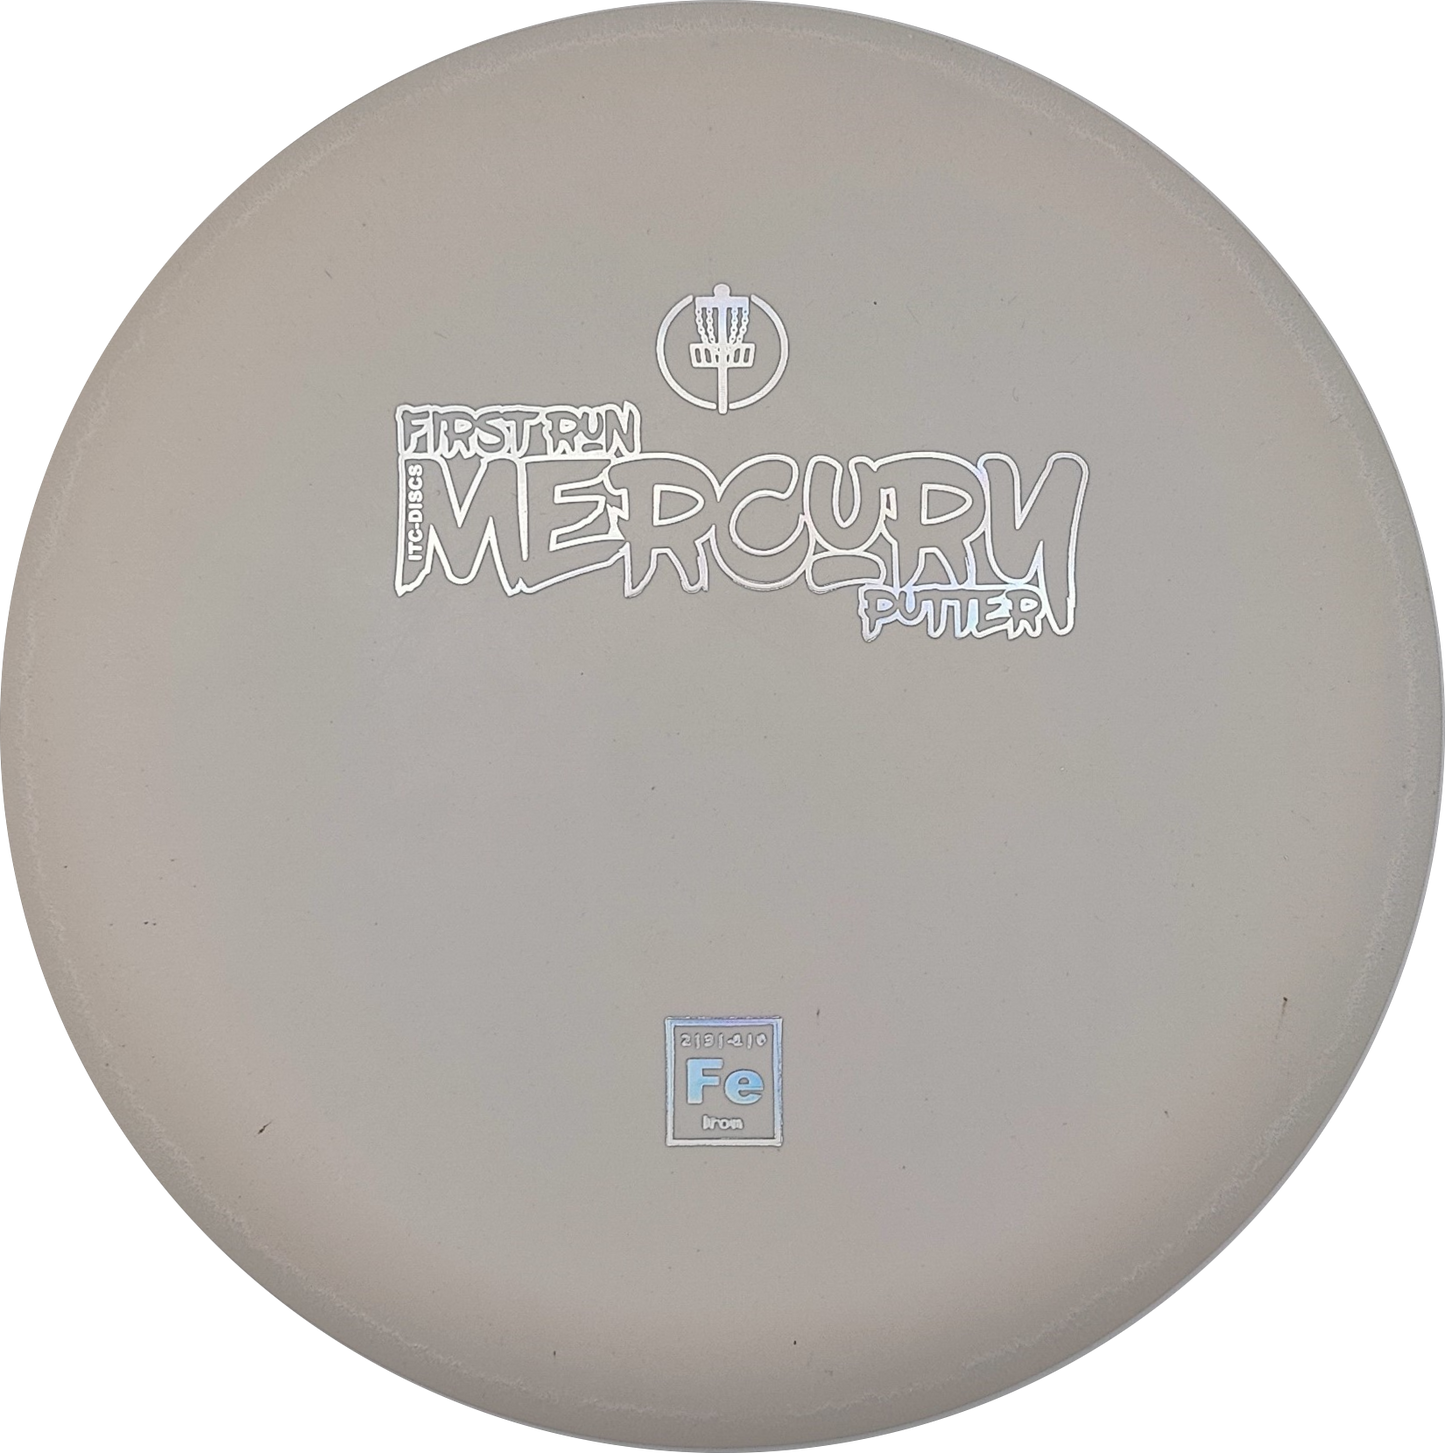 ITC Discs Mercury Iron First Run